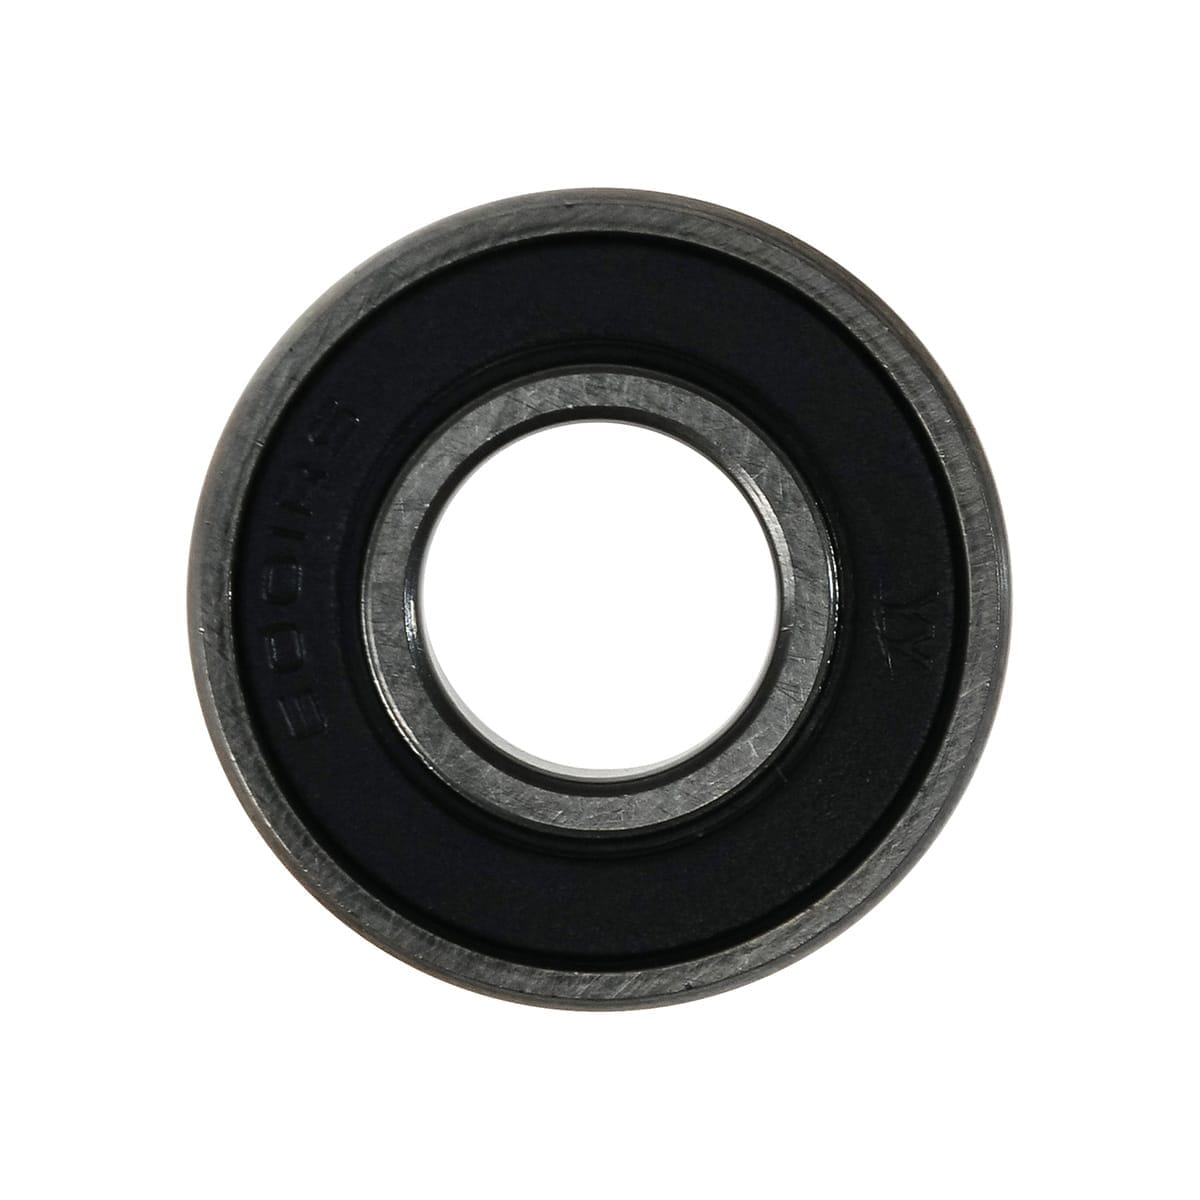 Roulement BLACK BEARING B5 ABEC5 6704-2RS (20 x 27 x 4 mm)